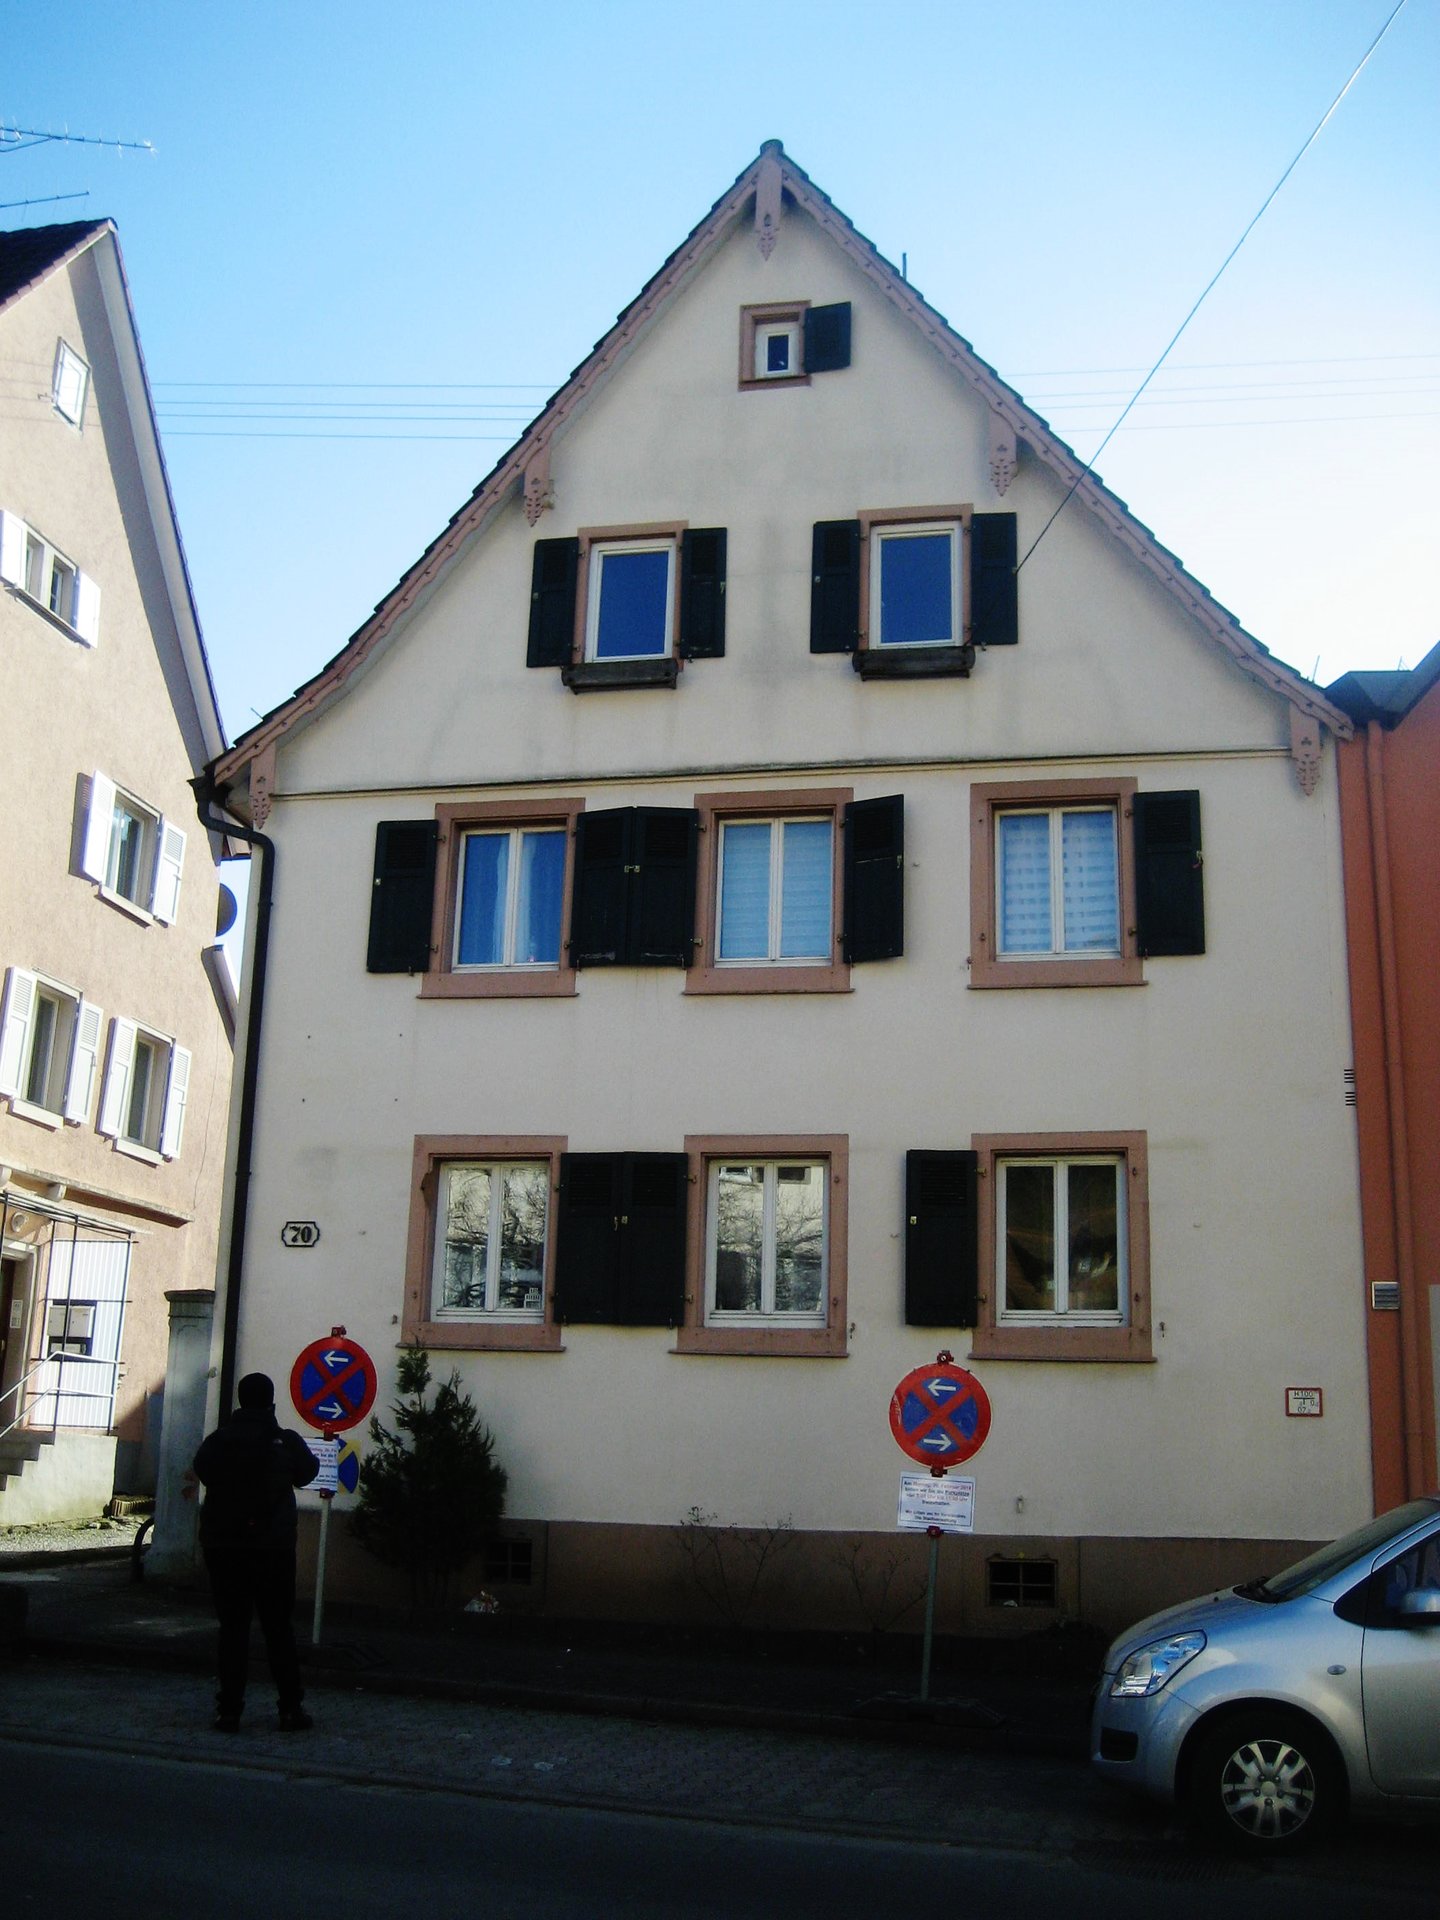 Bloch house, Sulzburg, Hauptstr. 70, Sun. 2.25.18 (# 2).JPG